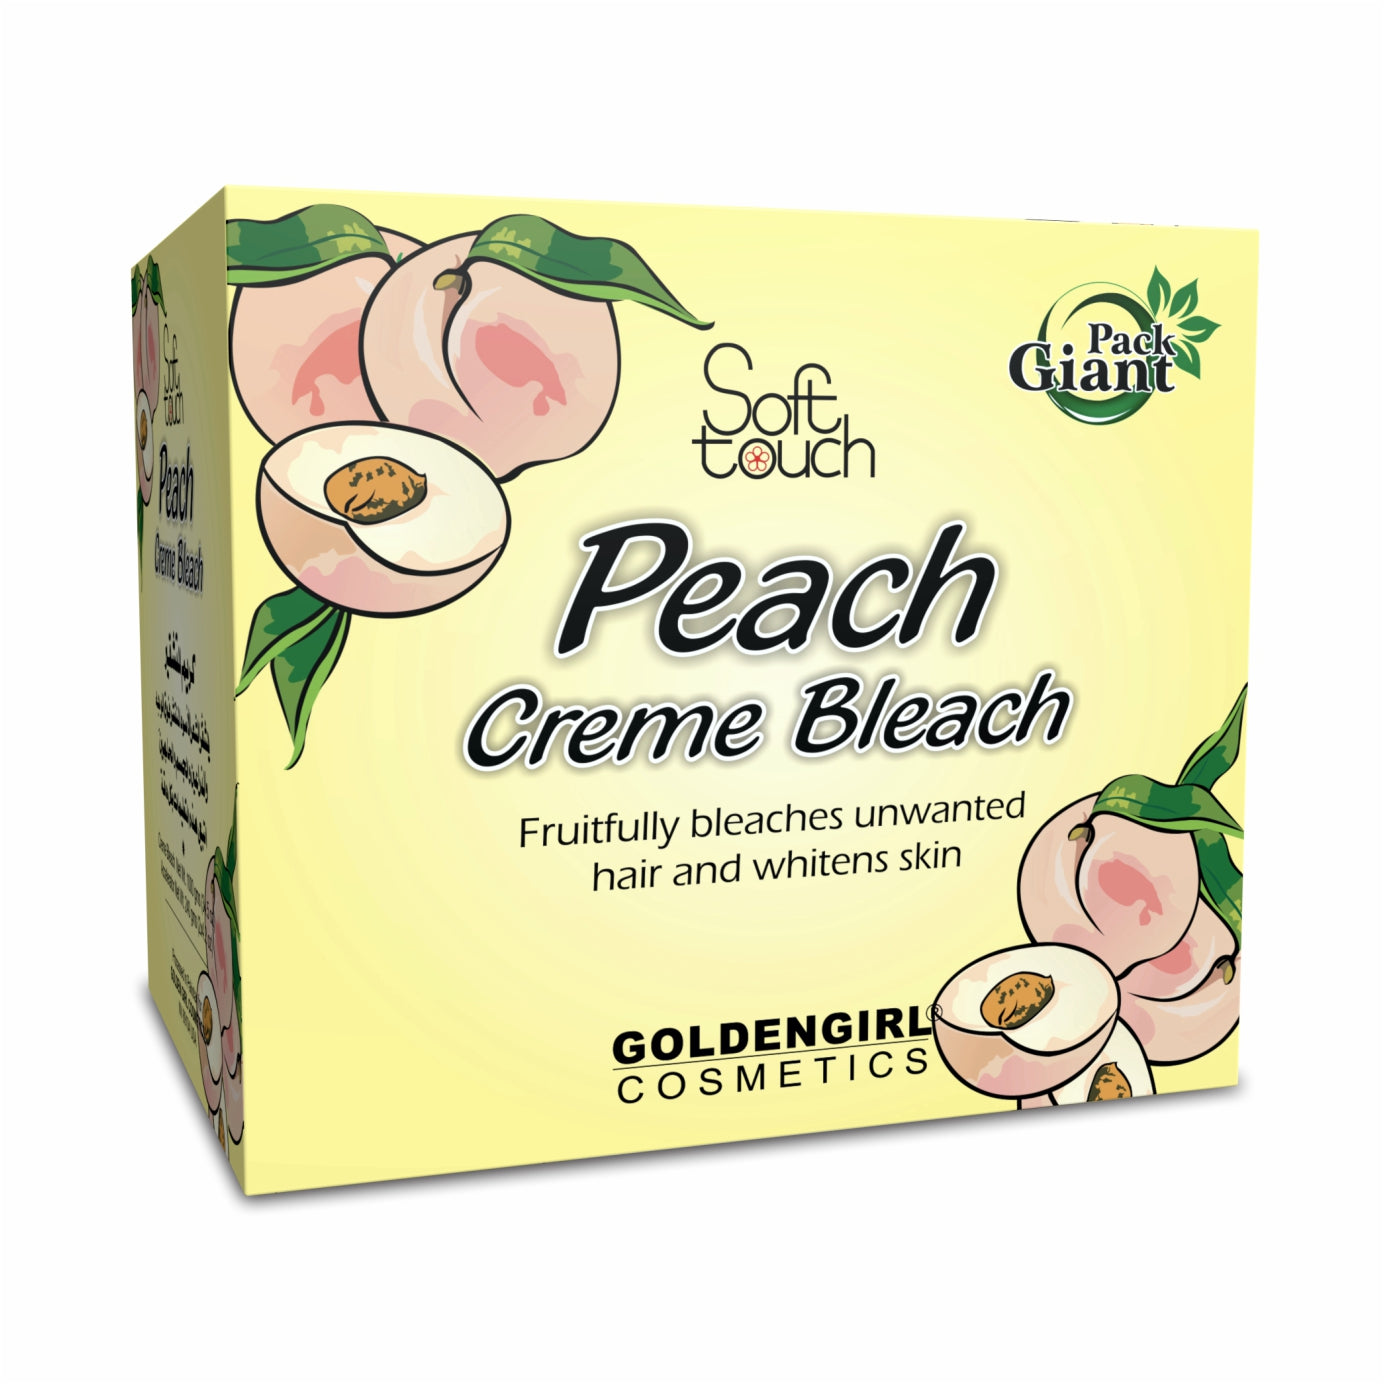 Peach Bleach Creme Giant Pack 1000gm - Golden Girl Cosmetics